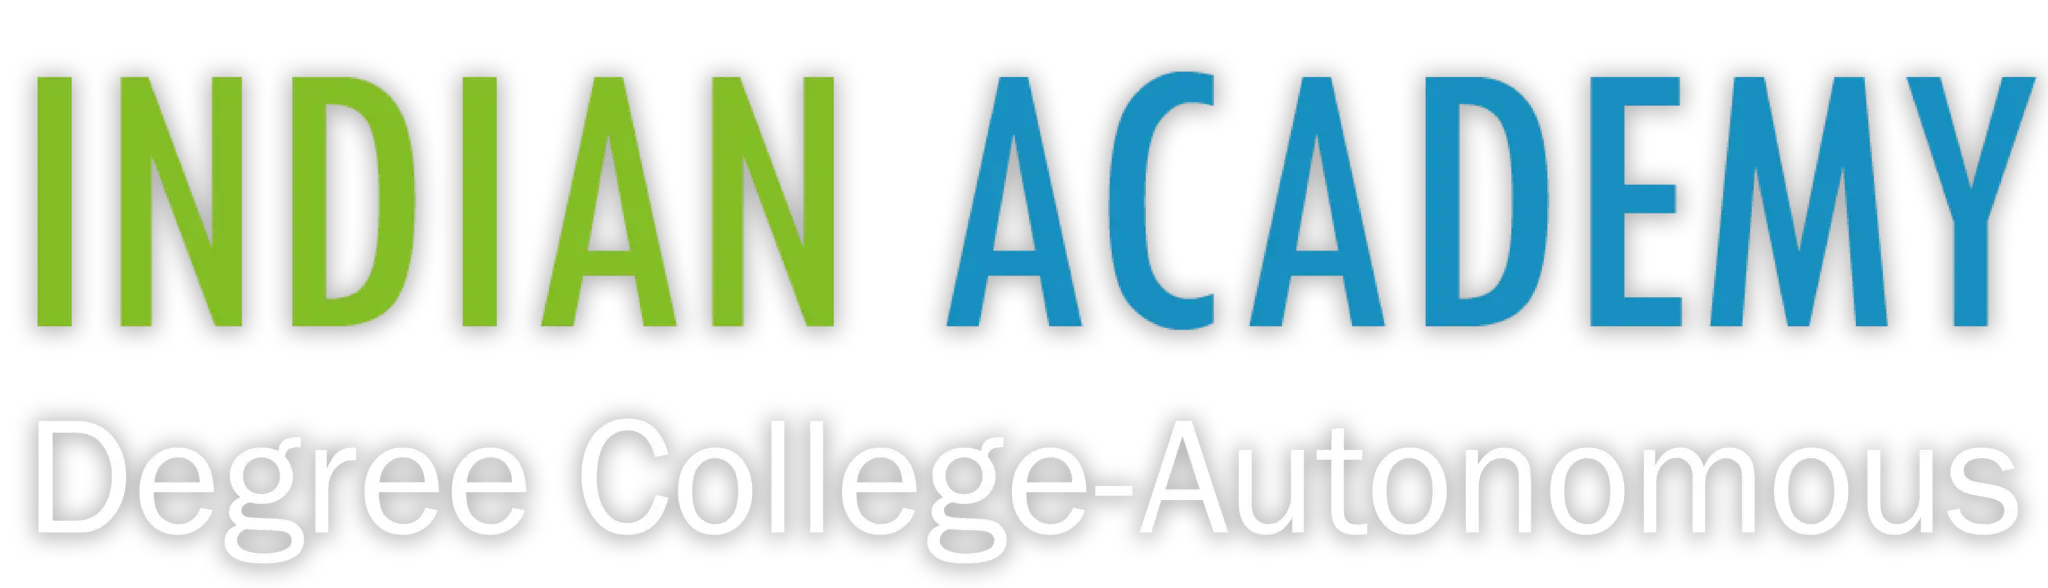 Indian Academy Degree College - Autonomous